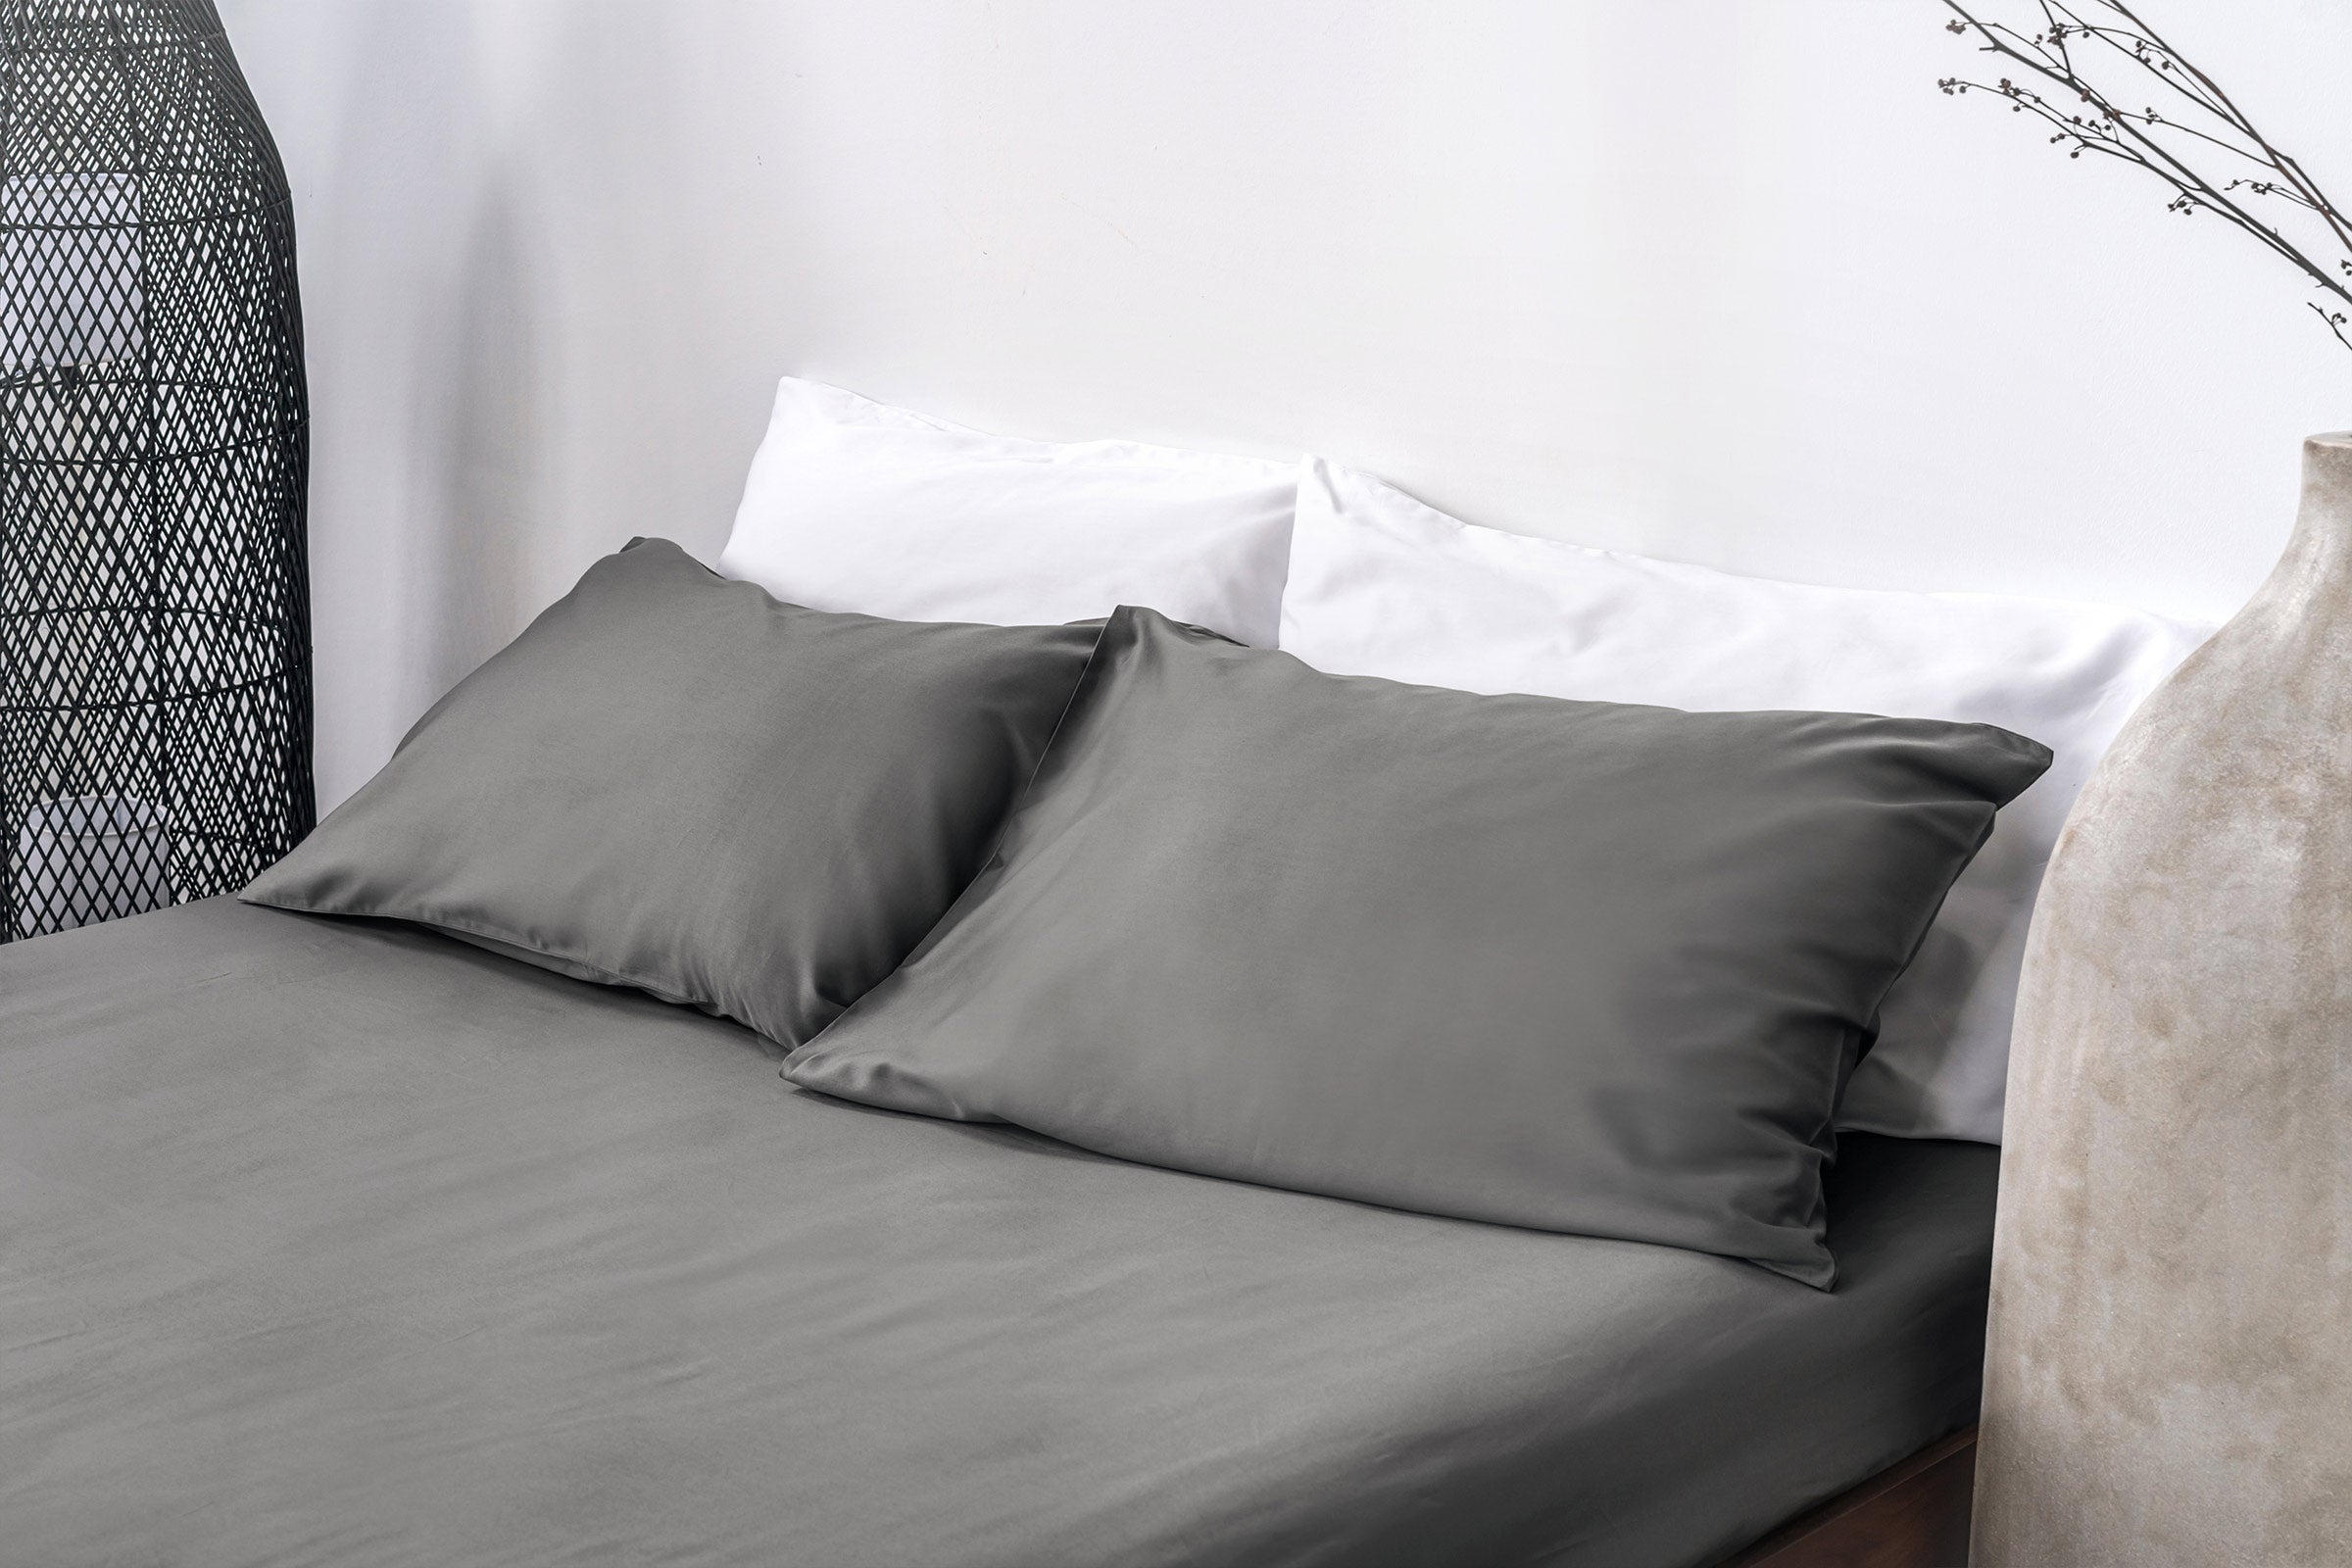 classic-stone-fitted-sheet-pillowcase-pair-white-pillowcase-pair-by-sojao.jpg